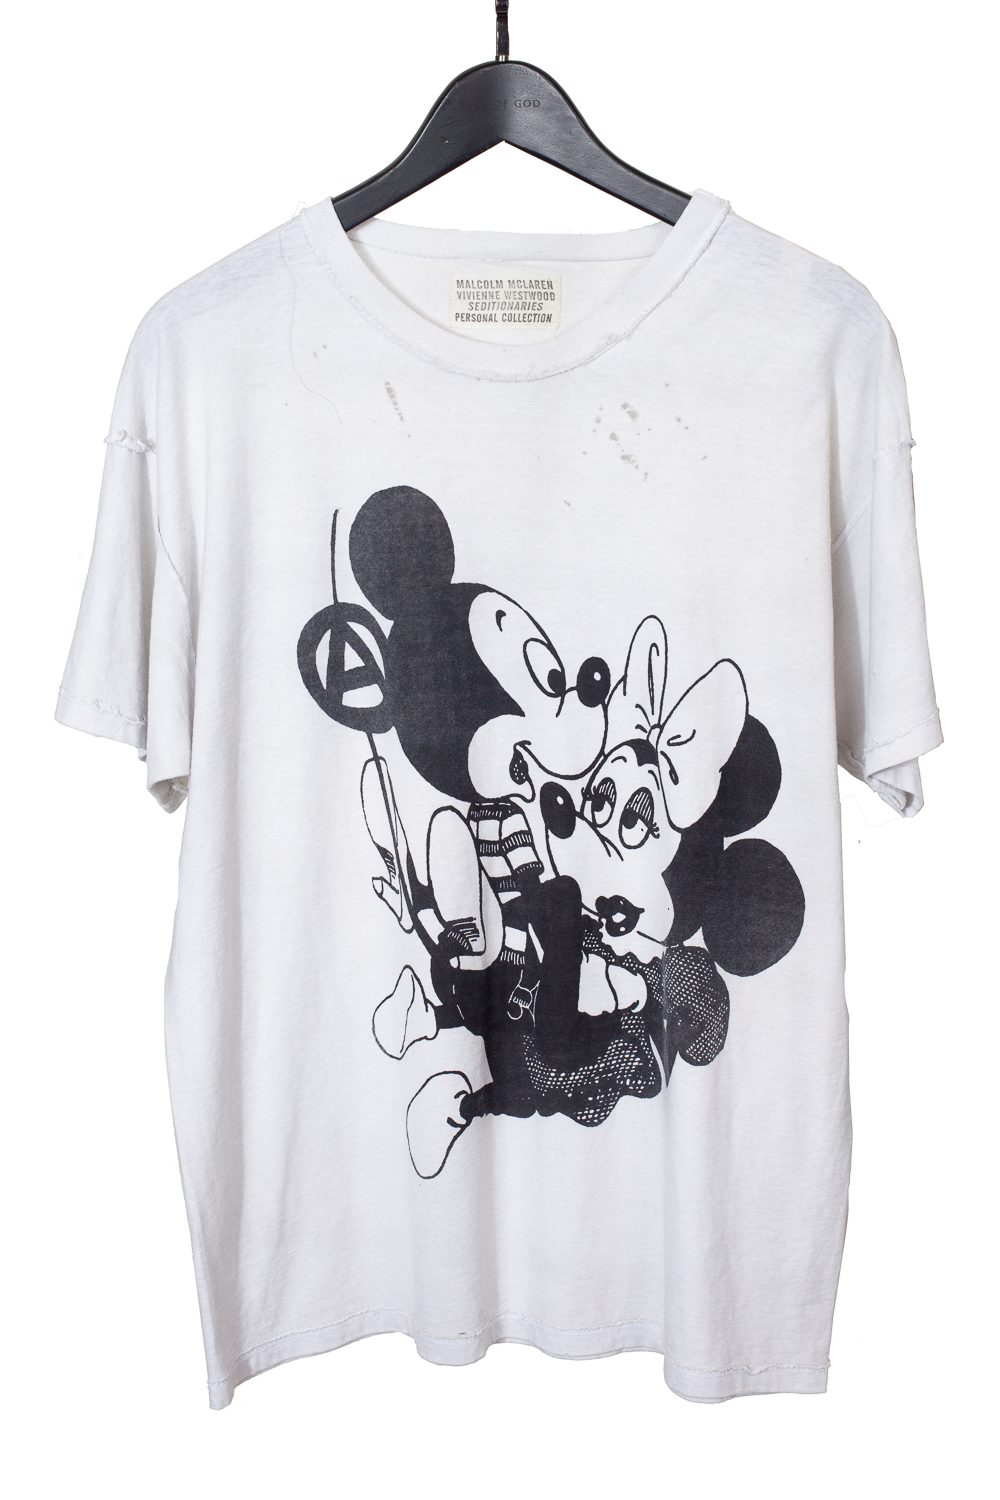 Late 70’s “OG” Mickey & Minnie Tee